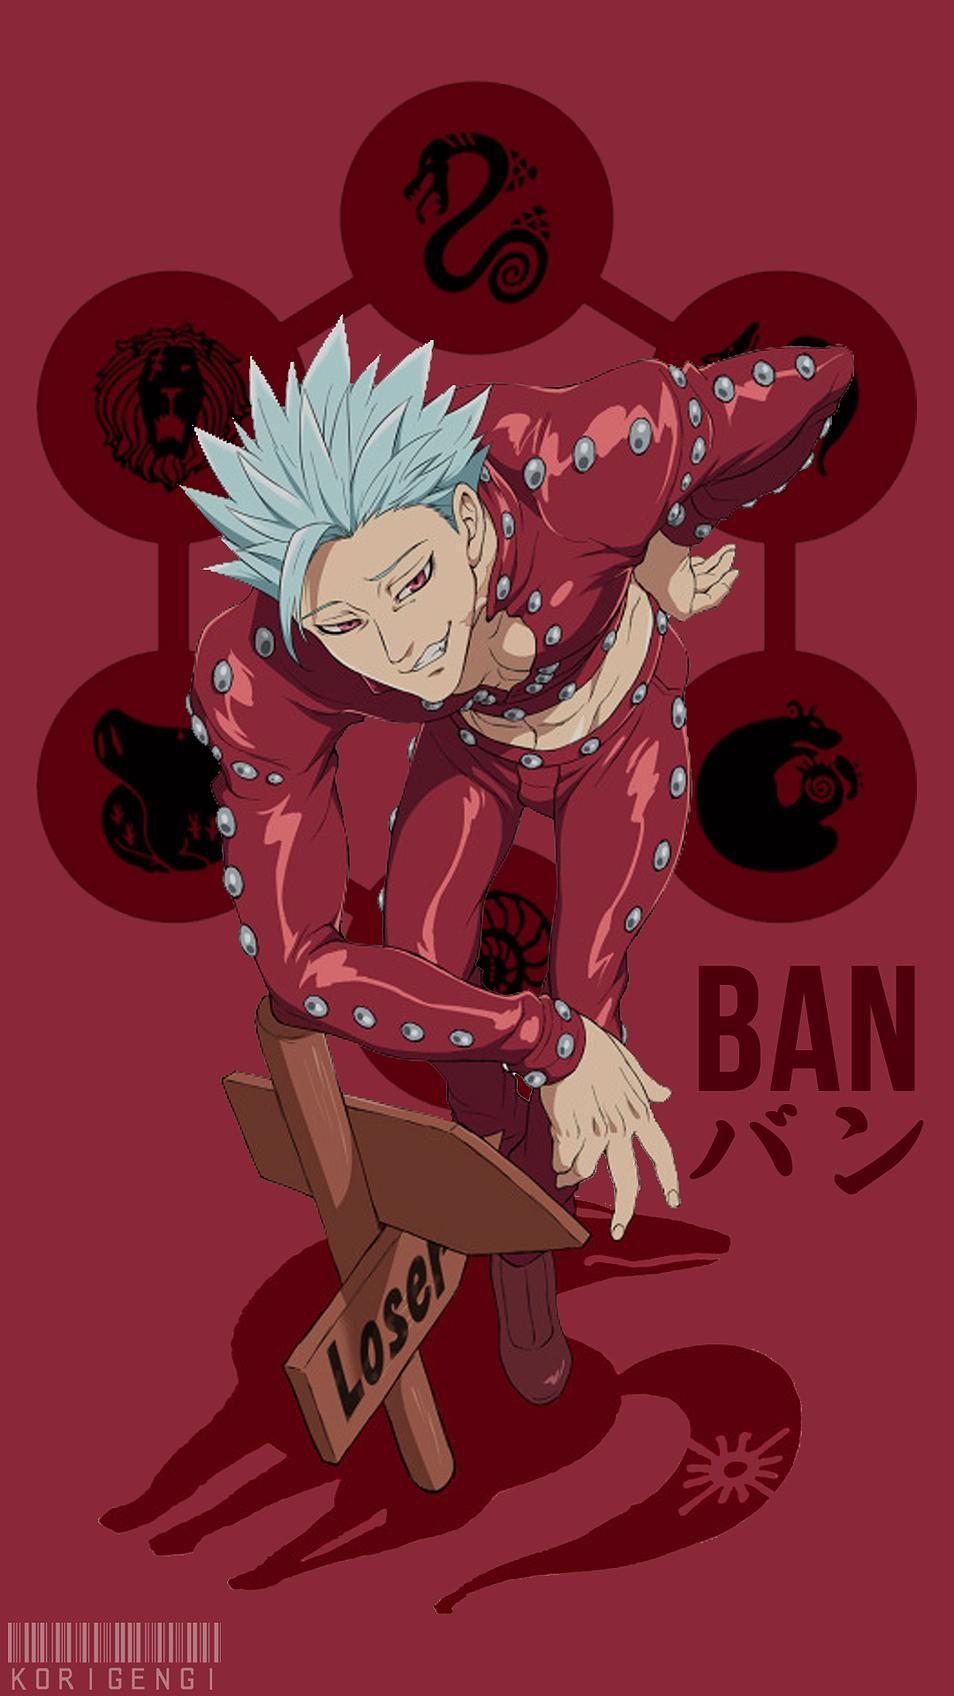 Ban Korigengi. Wallpaper Anime. JL?. Anime, Seven deadly sins